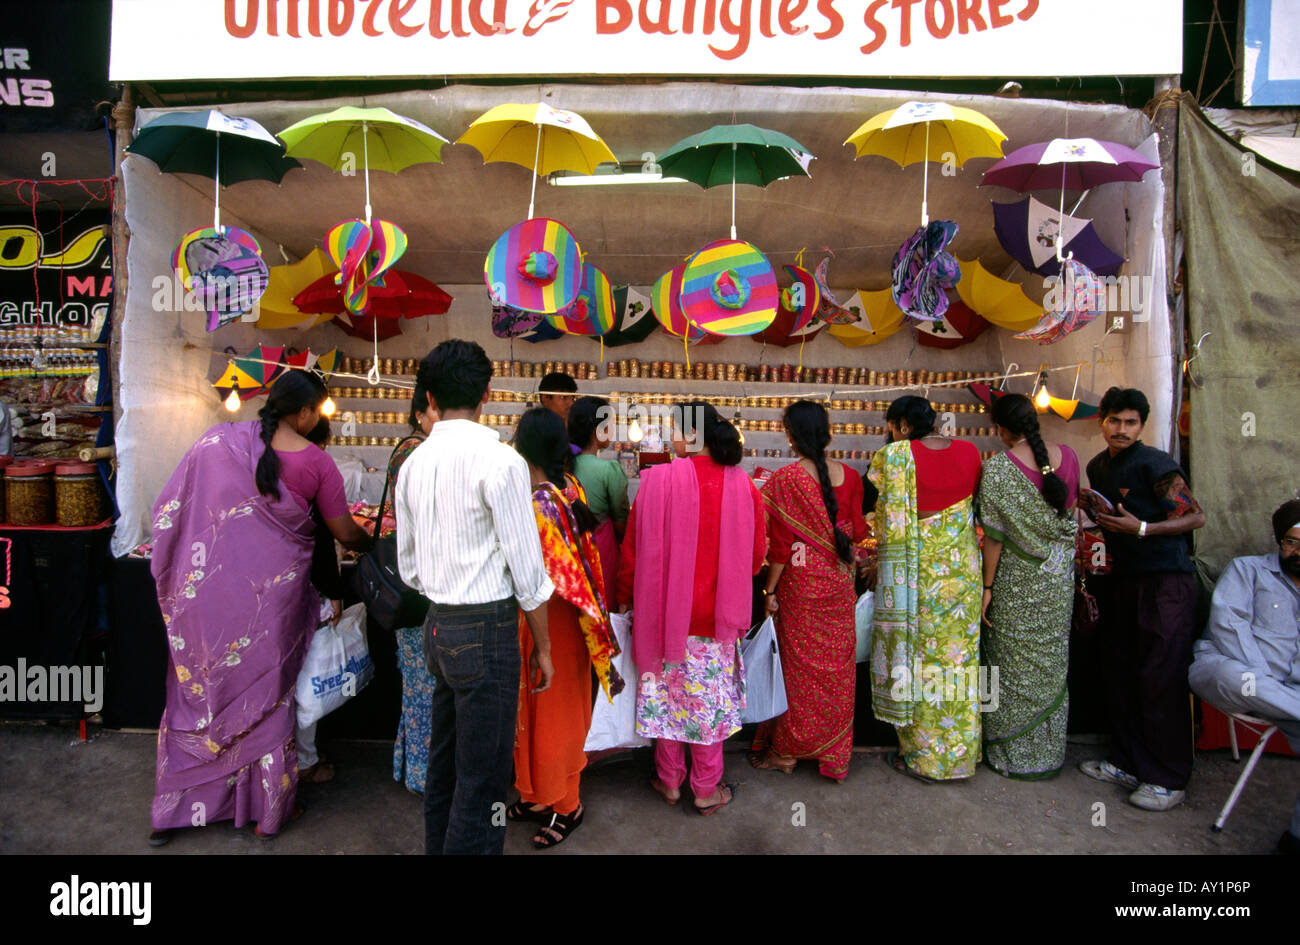 India West Bengal Calcutta women at bangle stall Stock Photo